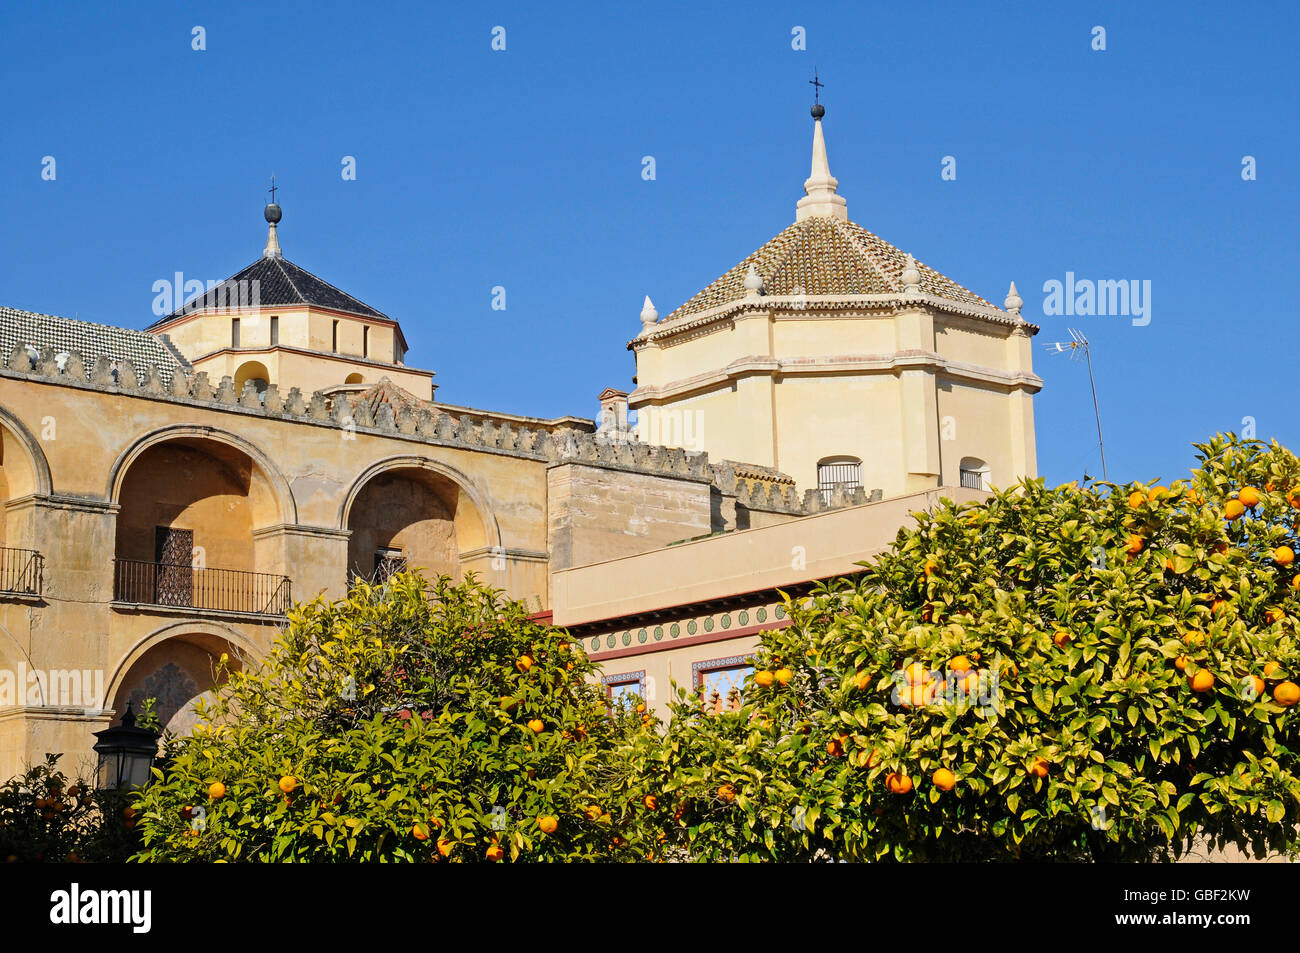 Mezquita, mosque, cathedral, Cordoba, Cordoba province, Andalucia, Spain, Europe Stock Photo